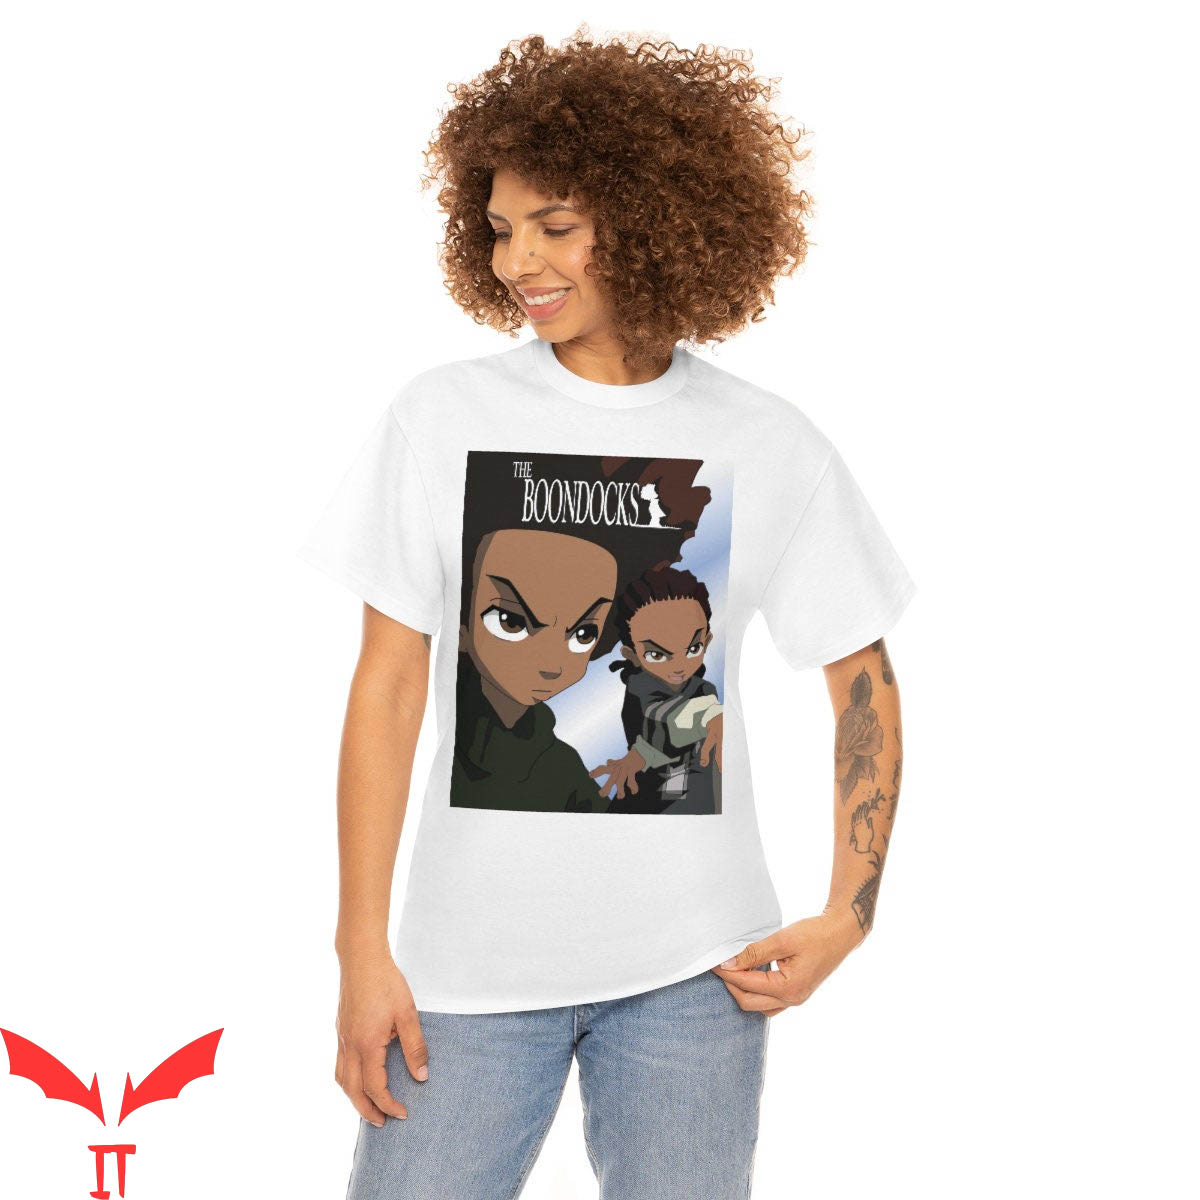 The Boondocks T-Shirt Cool Cartoon Trendy Quote Tee Shirt